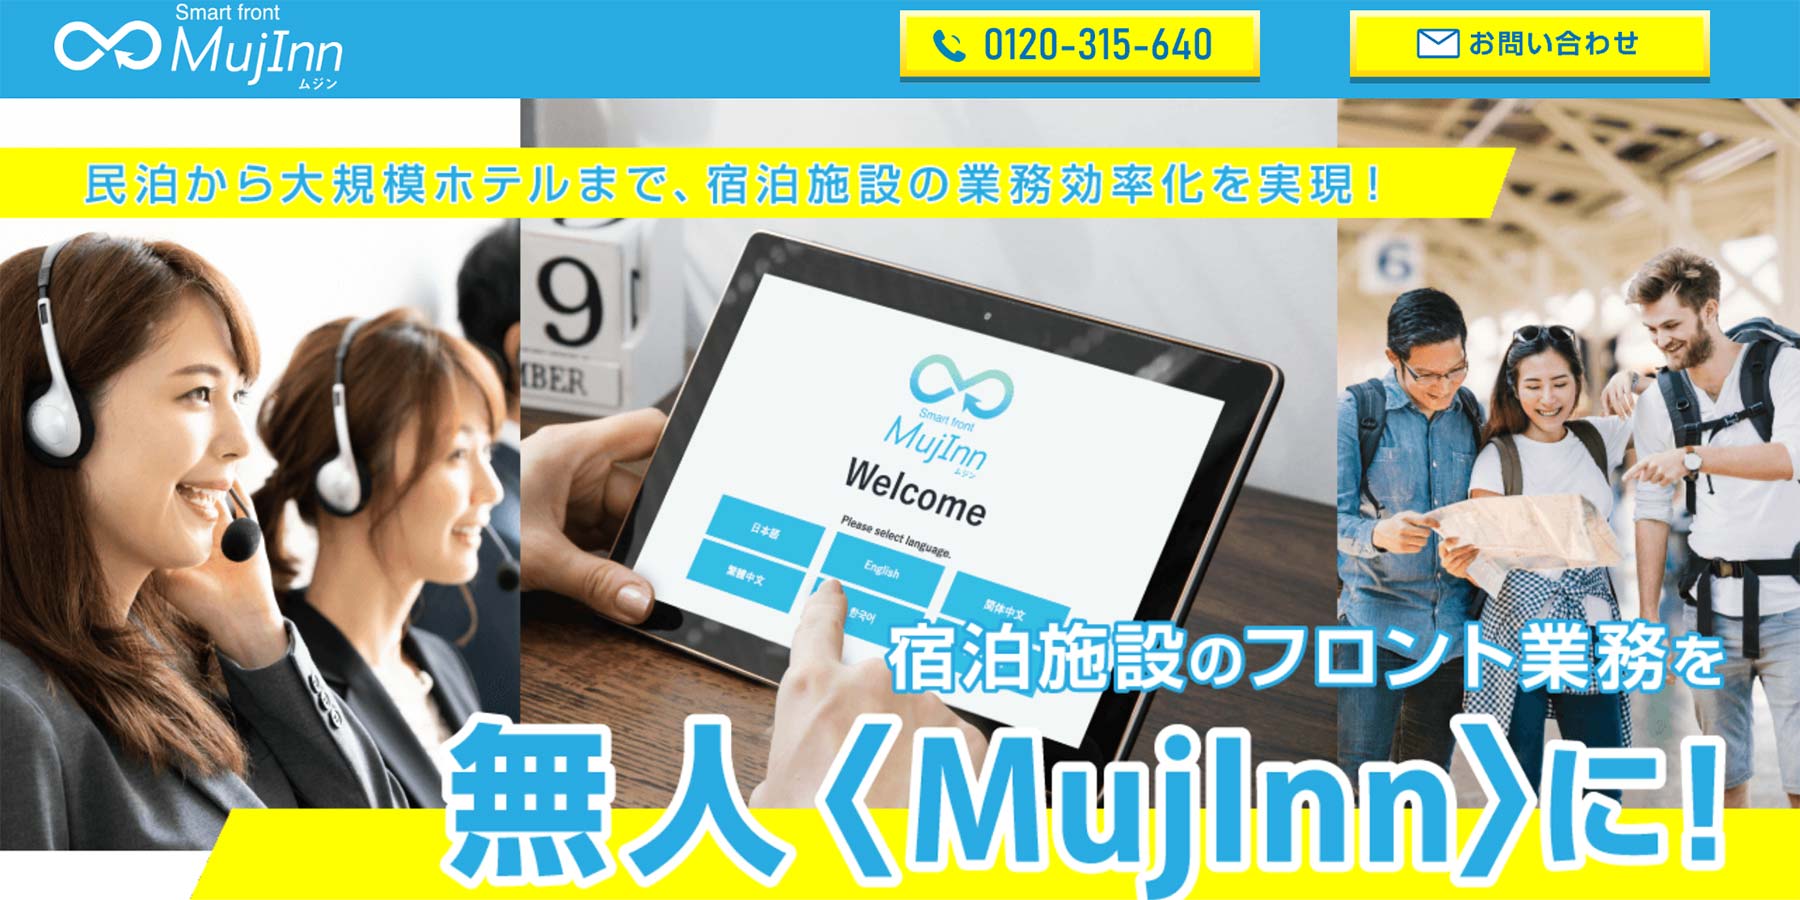 Mujinn公式Webサイト